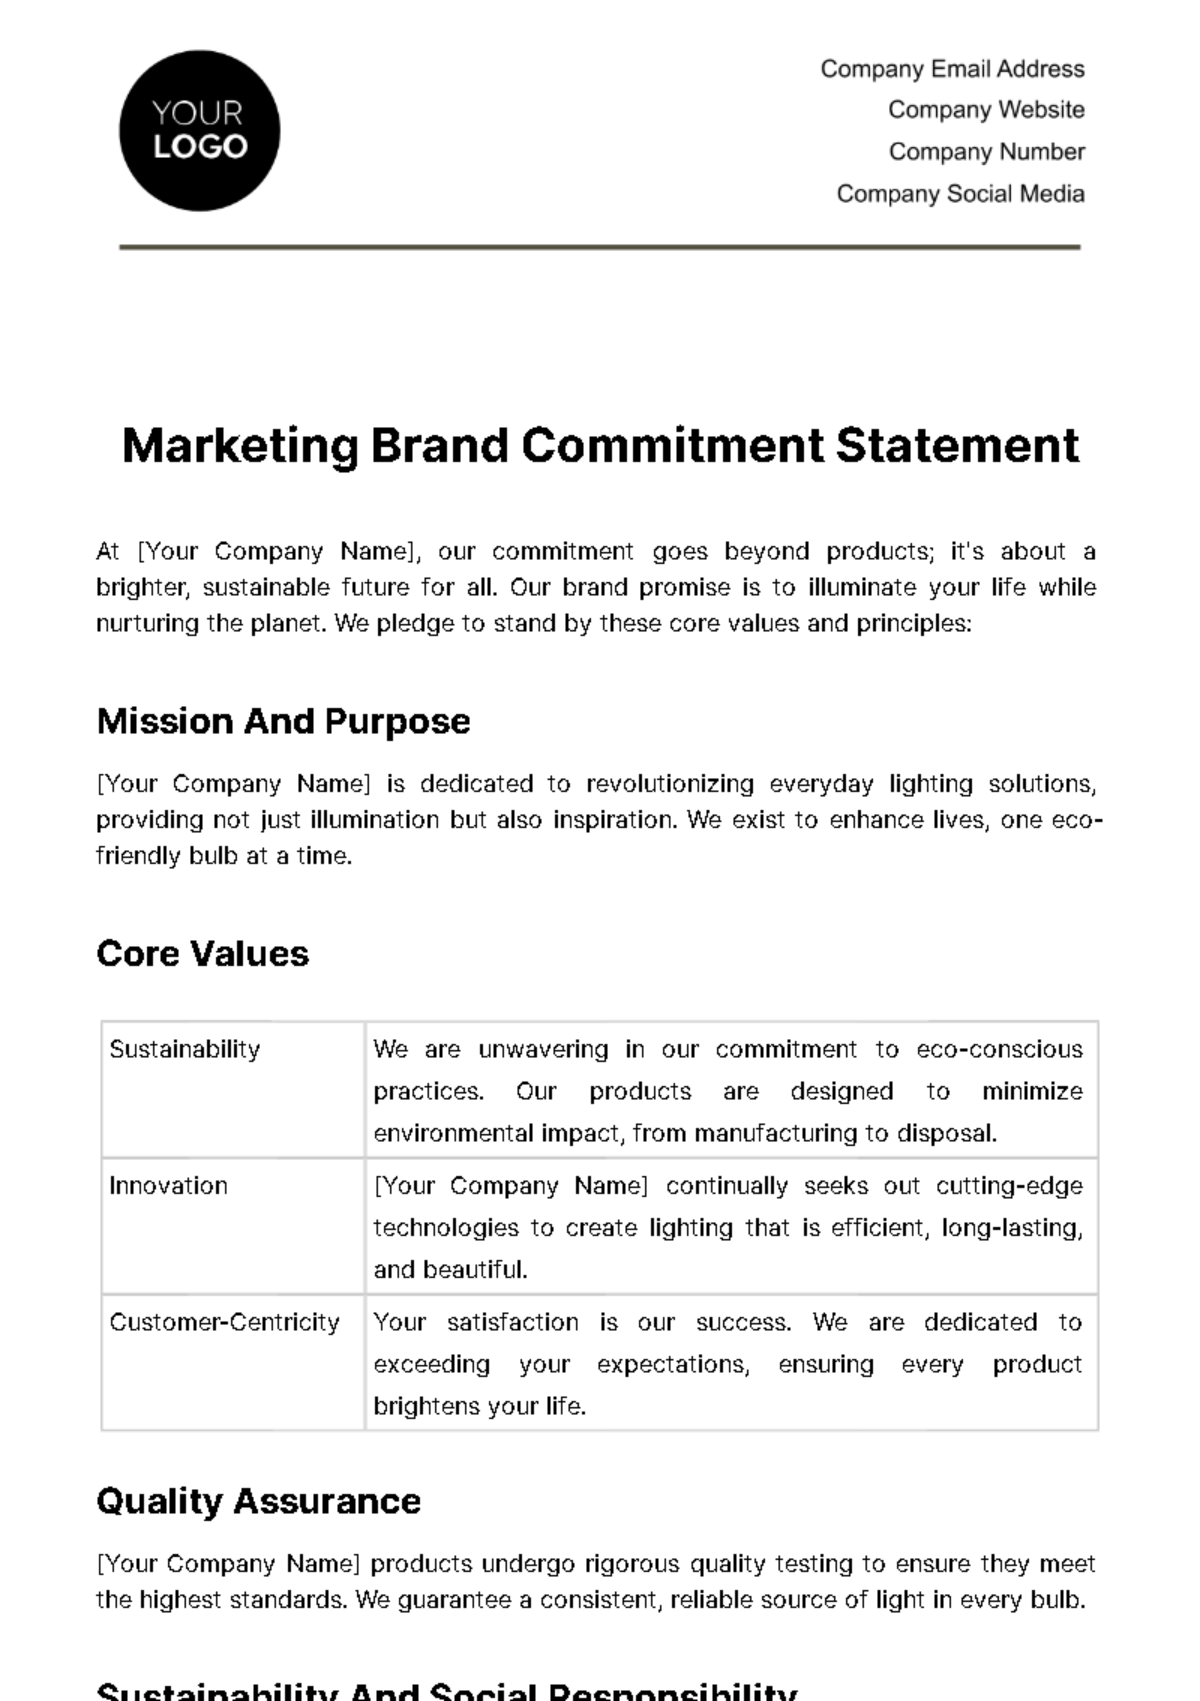 Marketing Brand Commitment Statement Template